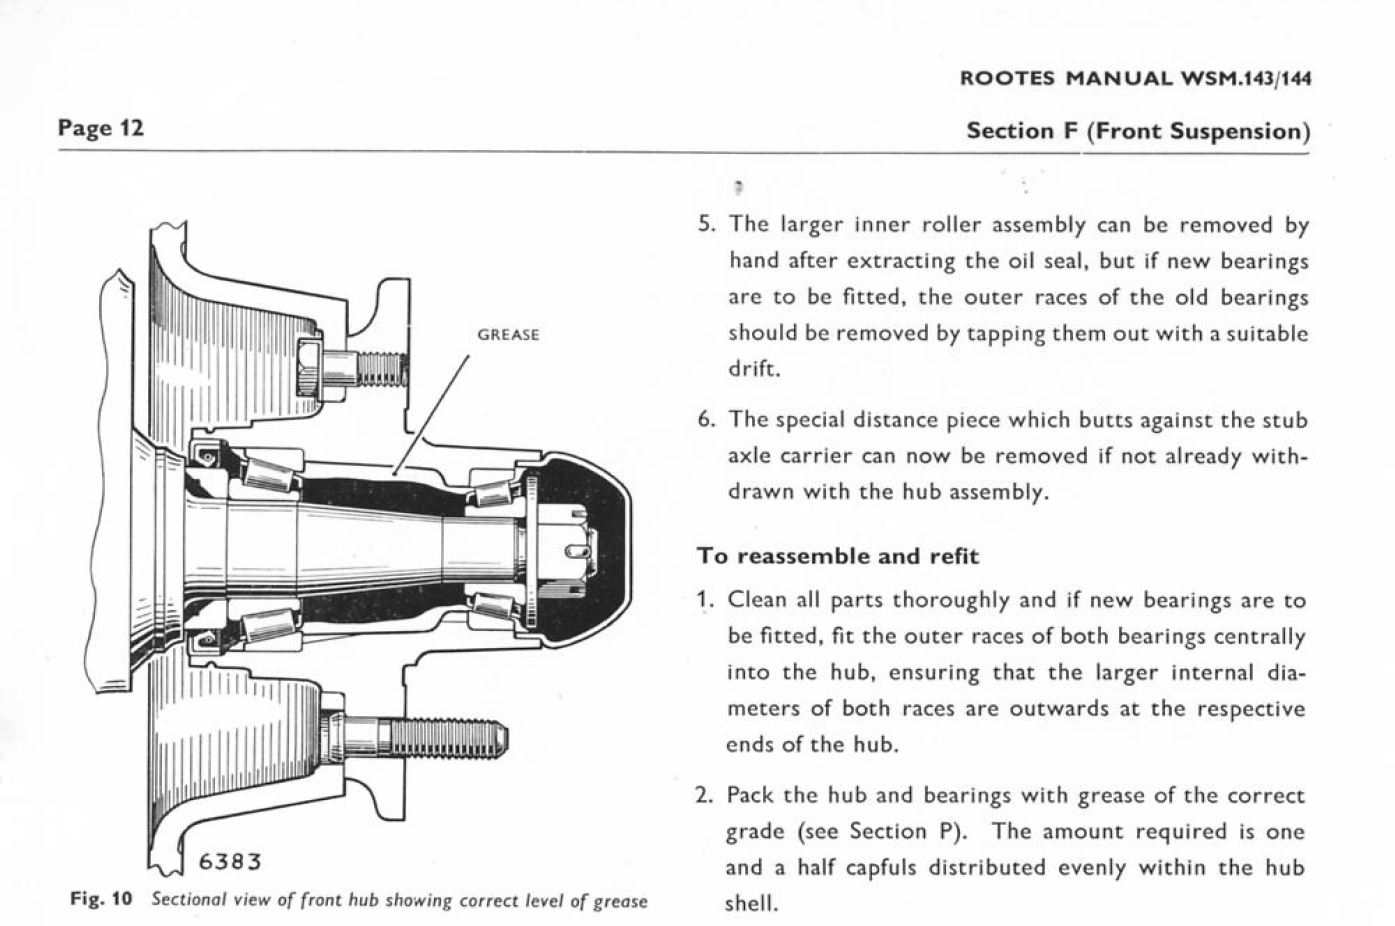 Workshop Manual F-12.JPG